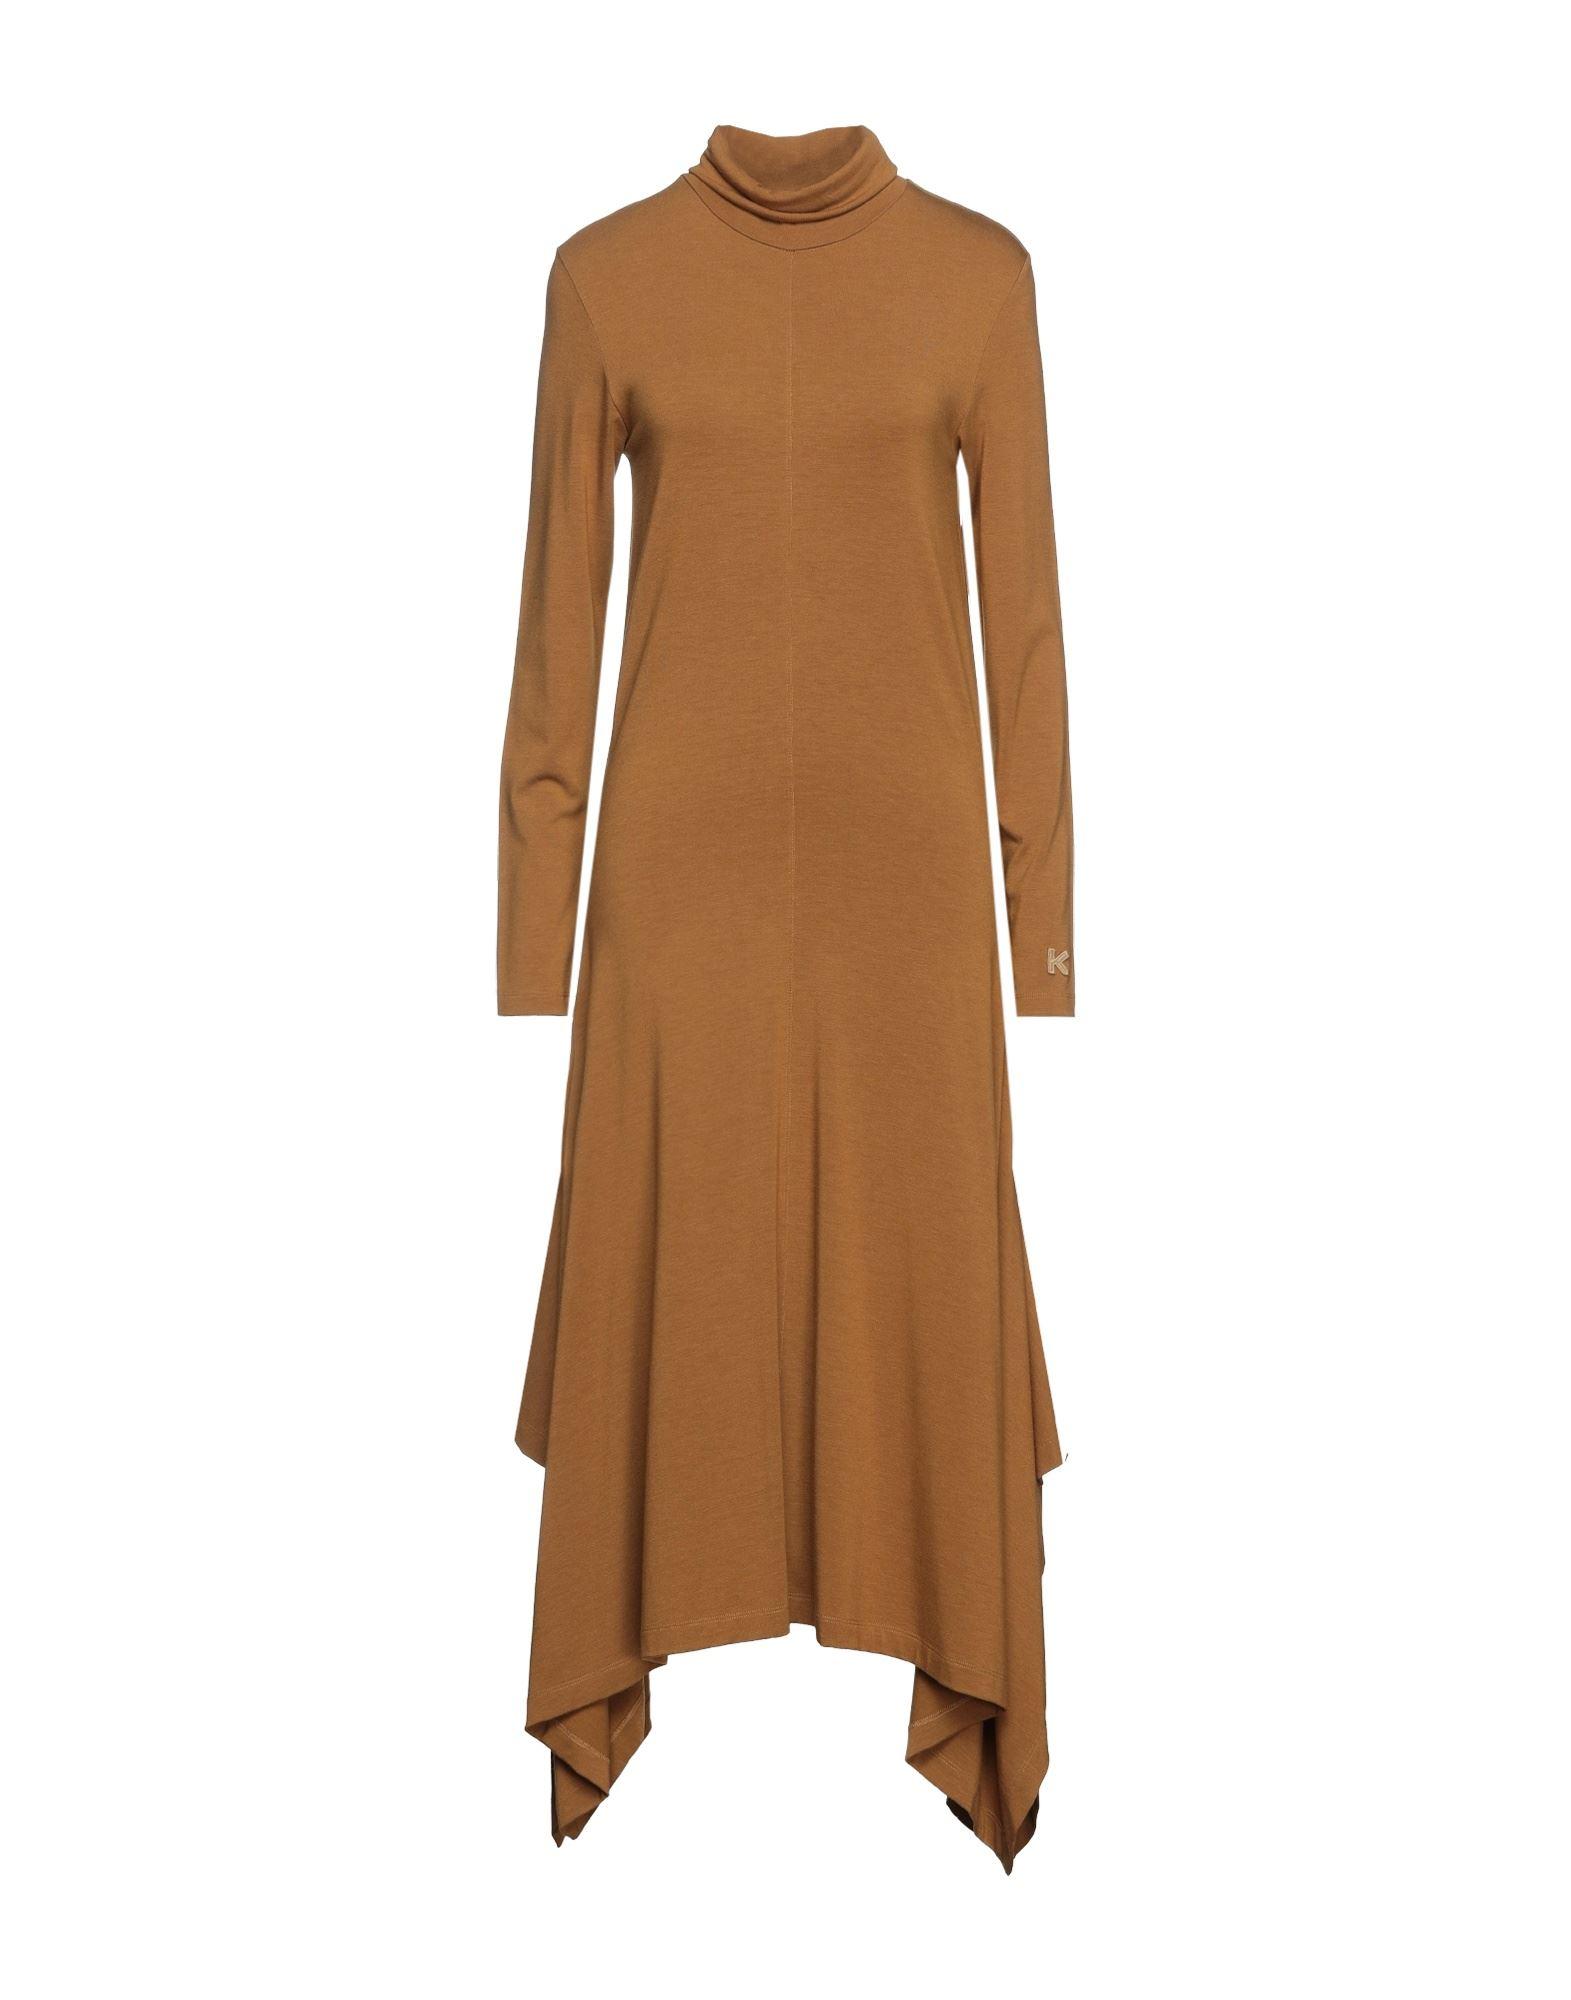 KENZO Synthetic Long Dress in Brown | Lyst